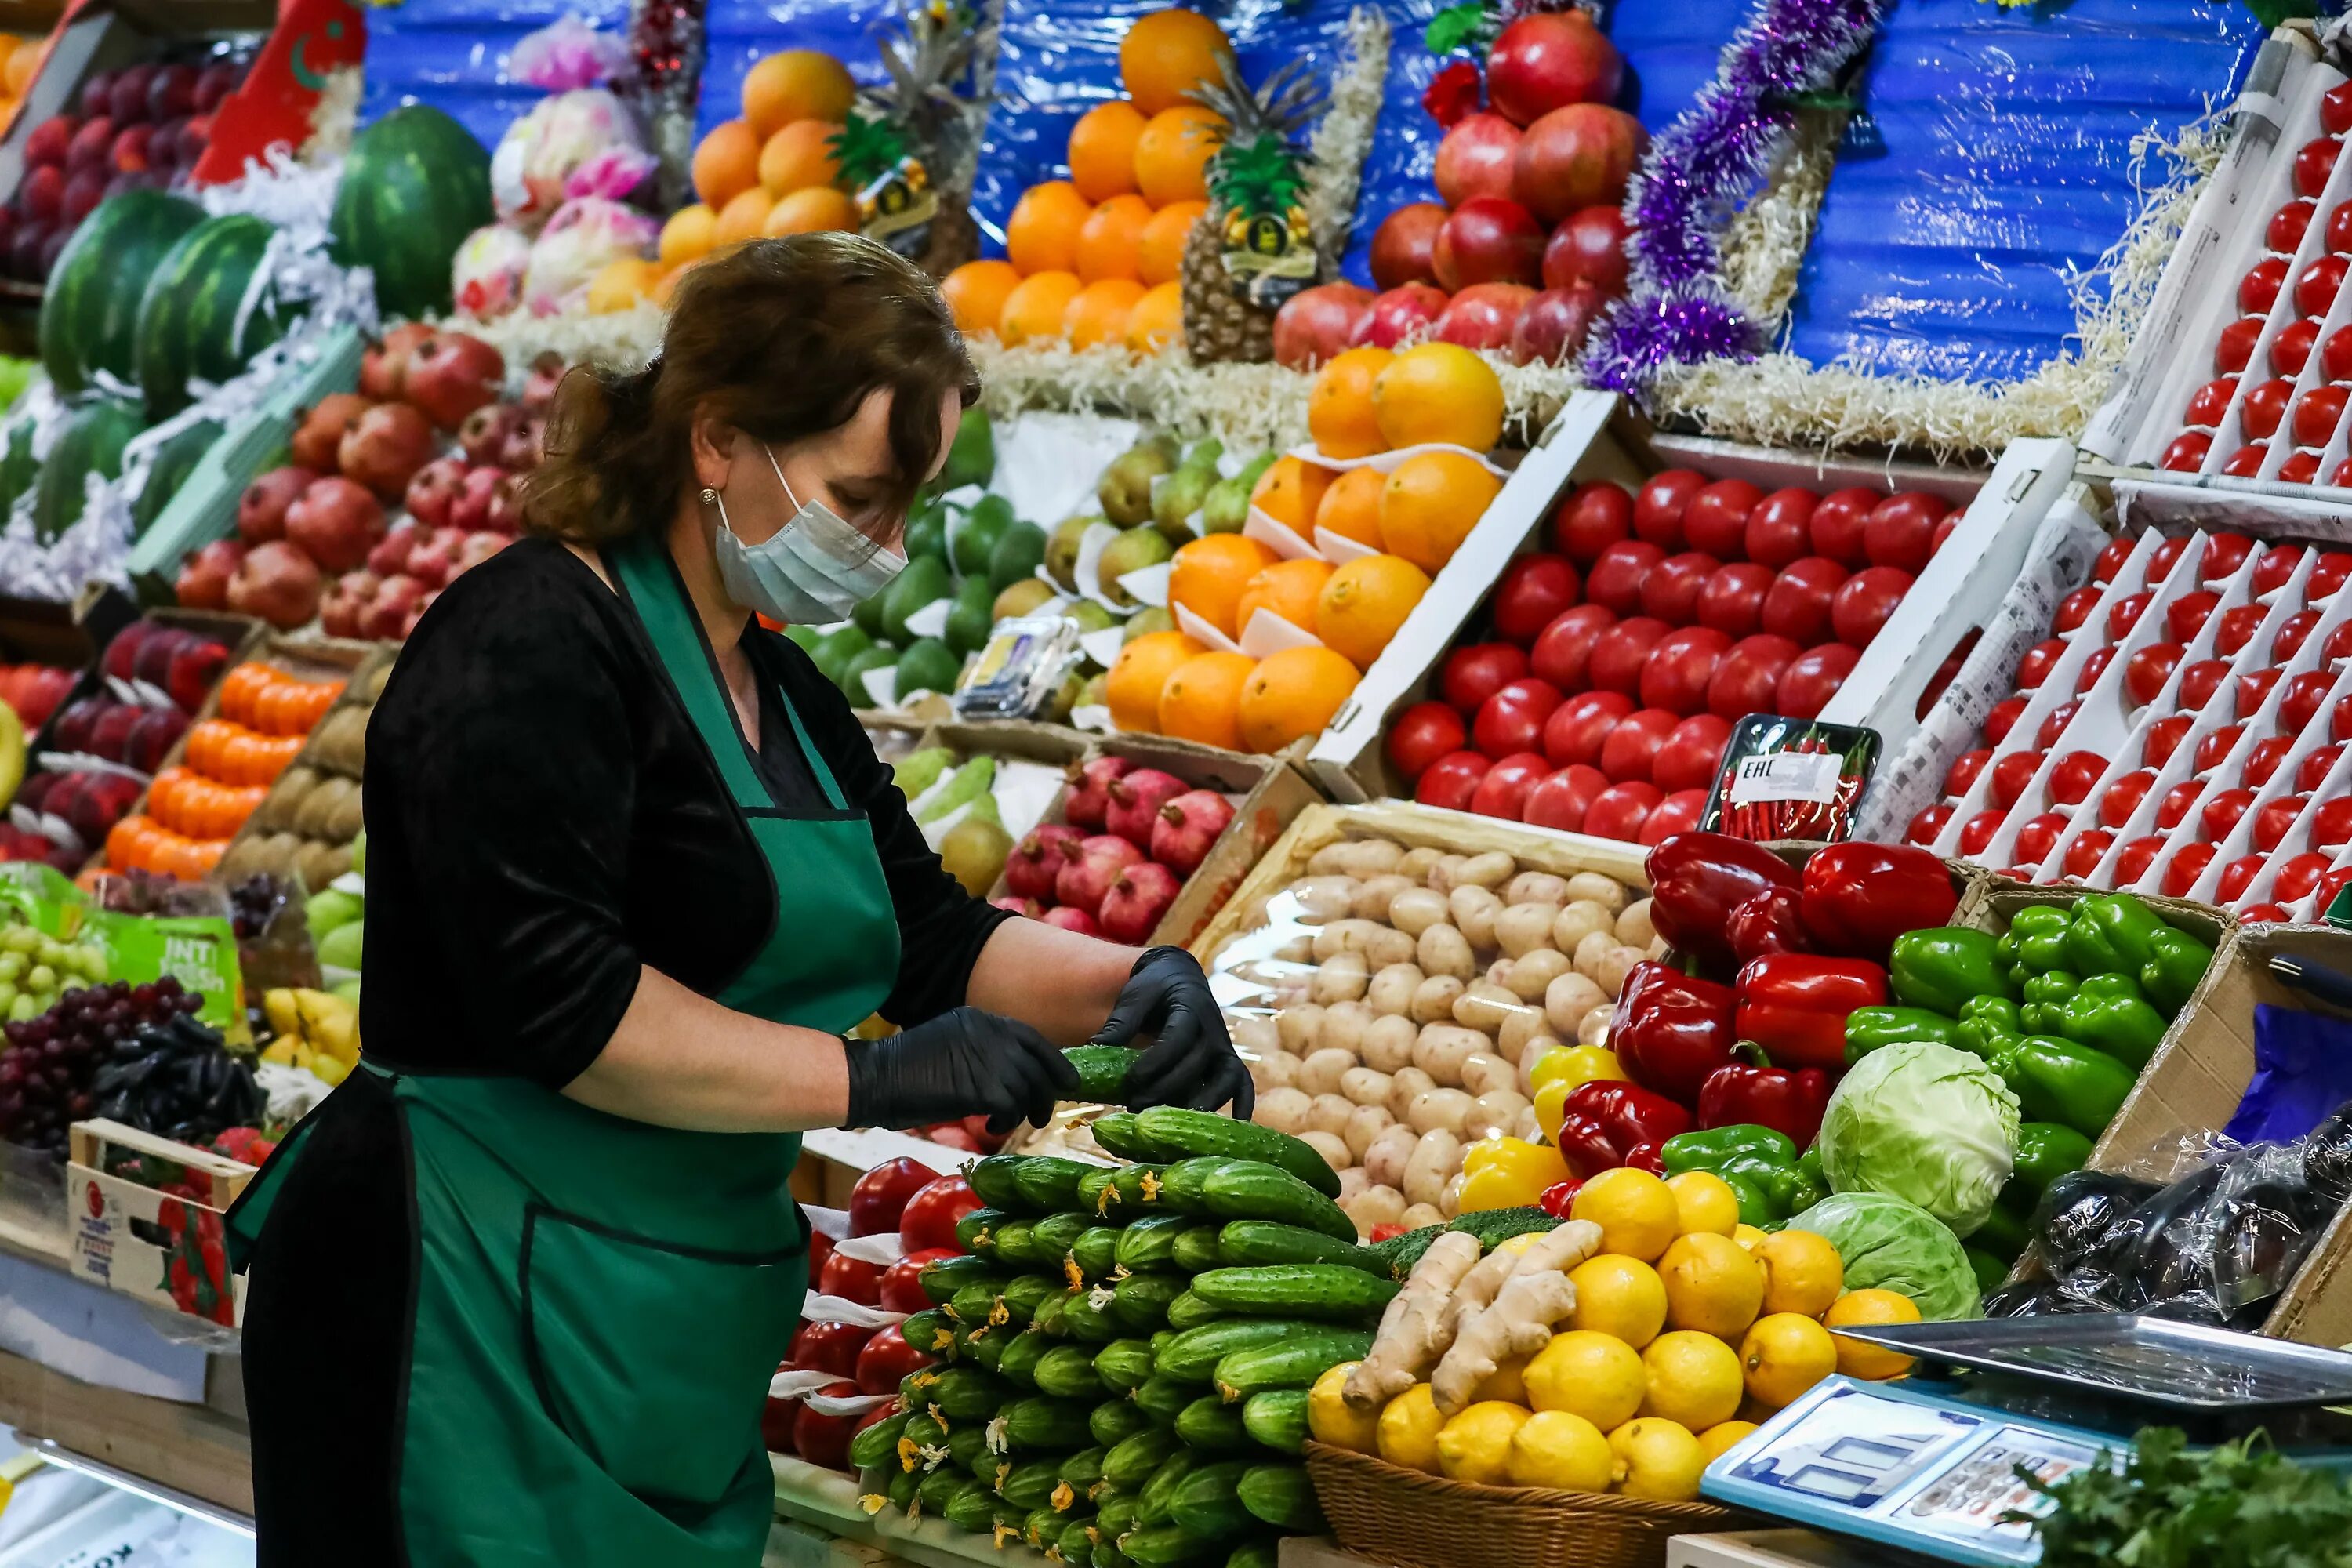 Овощи на прилавке. Овощи на рынке. Овощи и фрукты на рынке. Овощной прилавок.